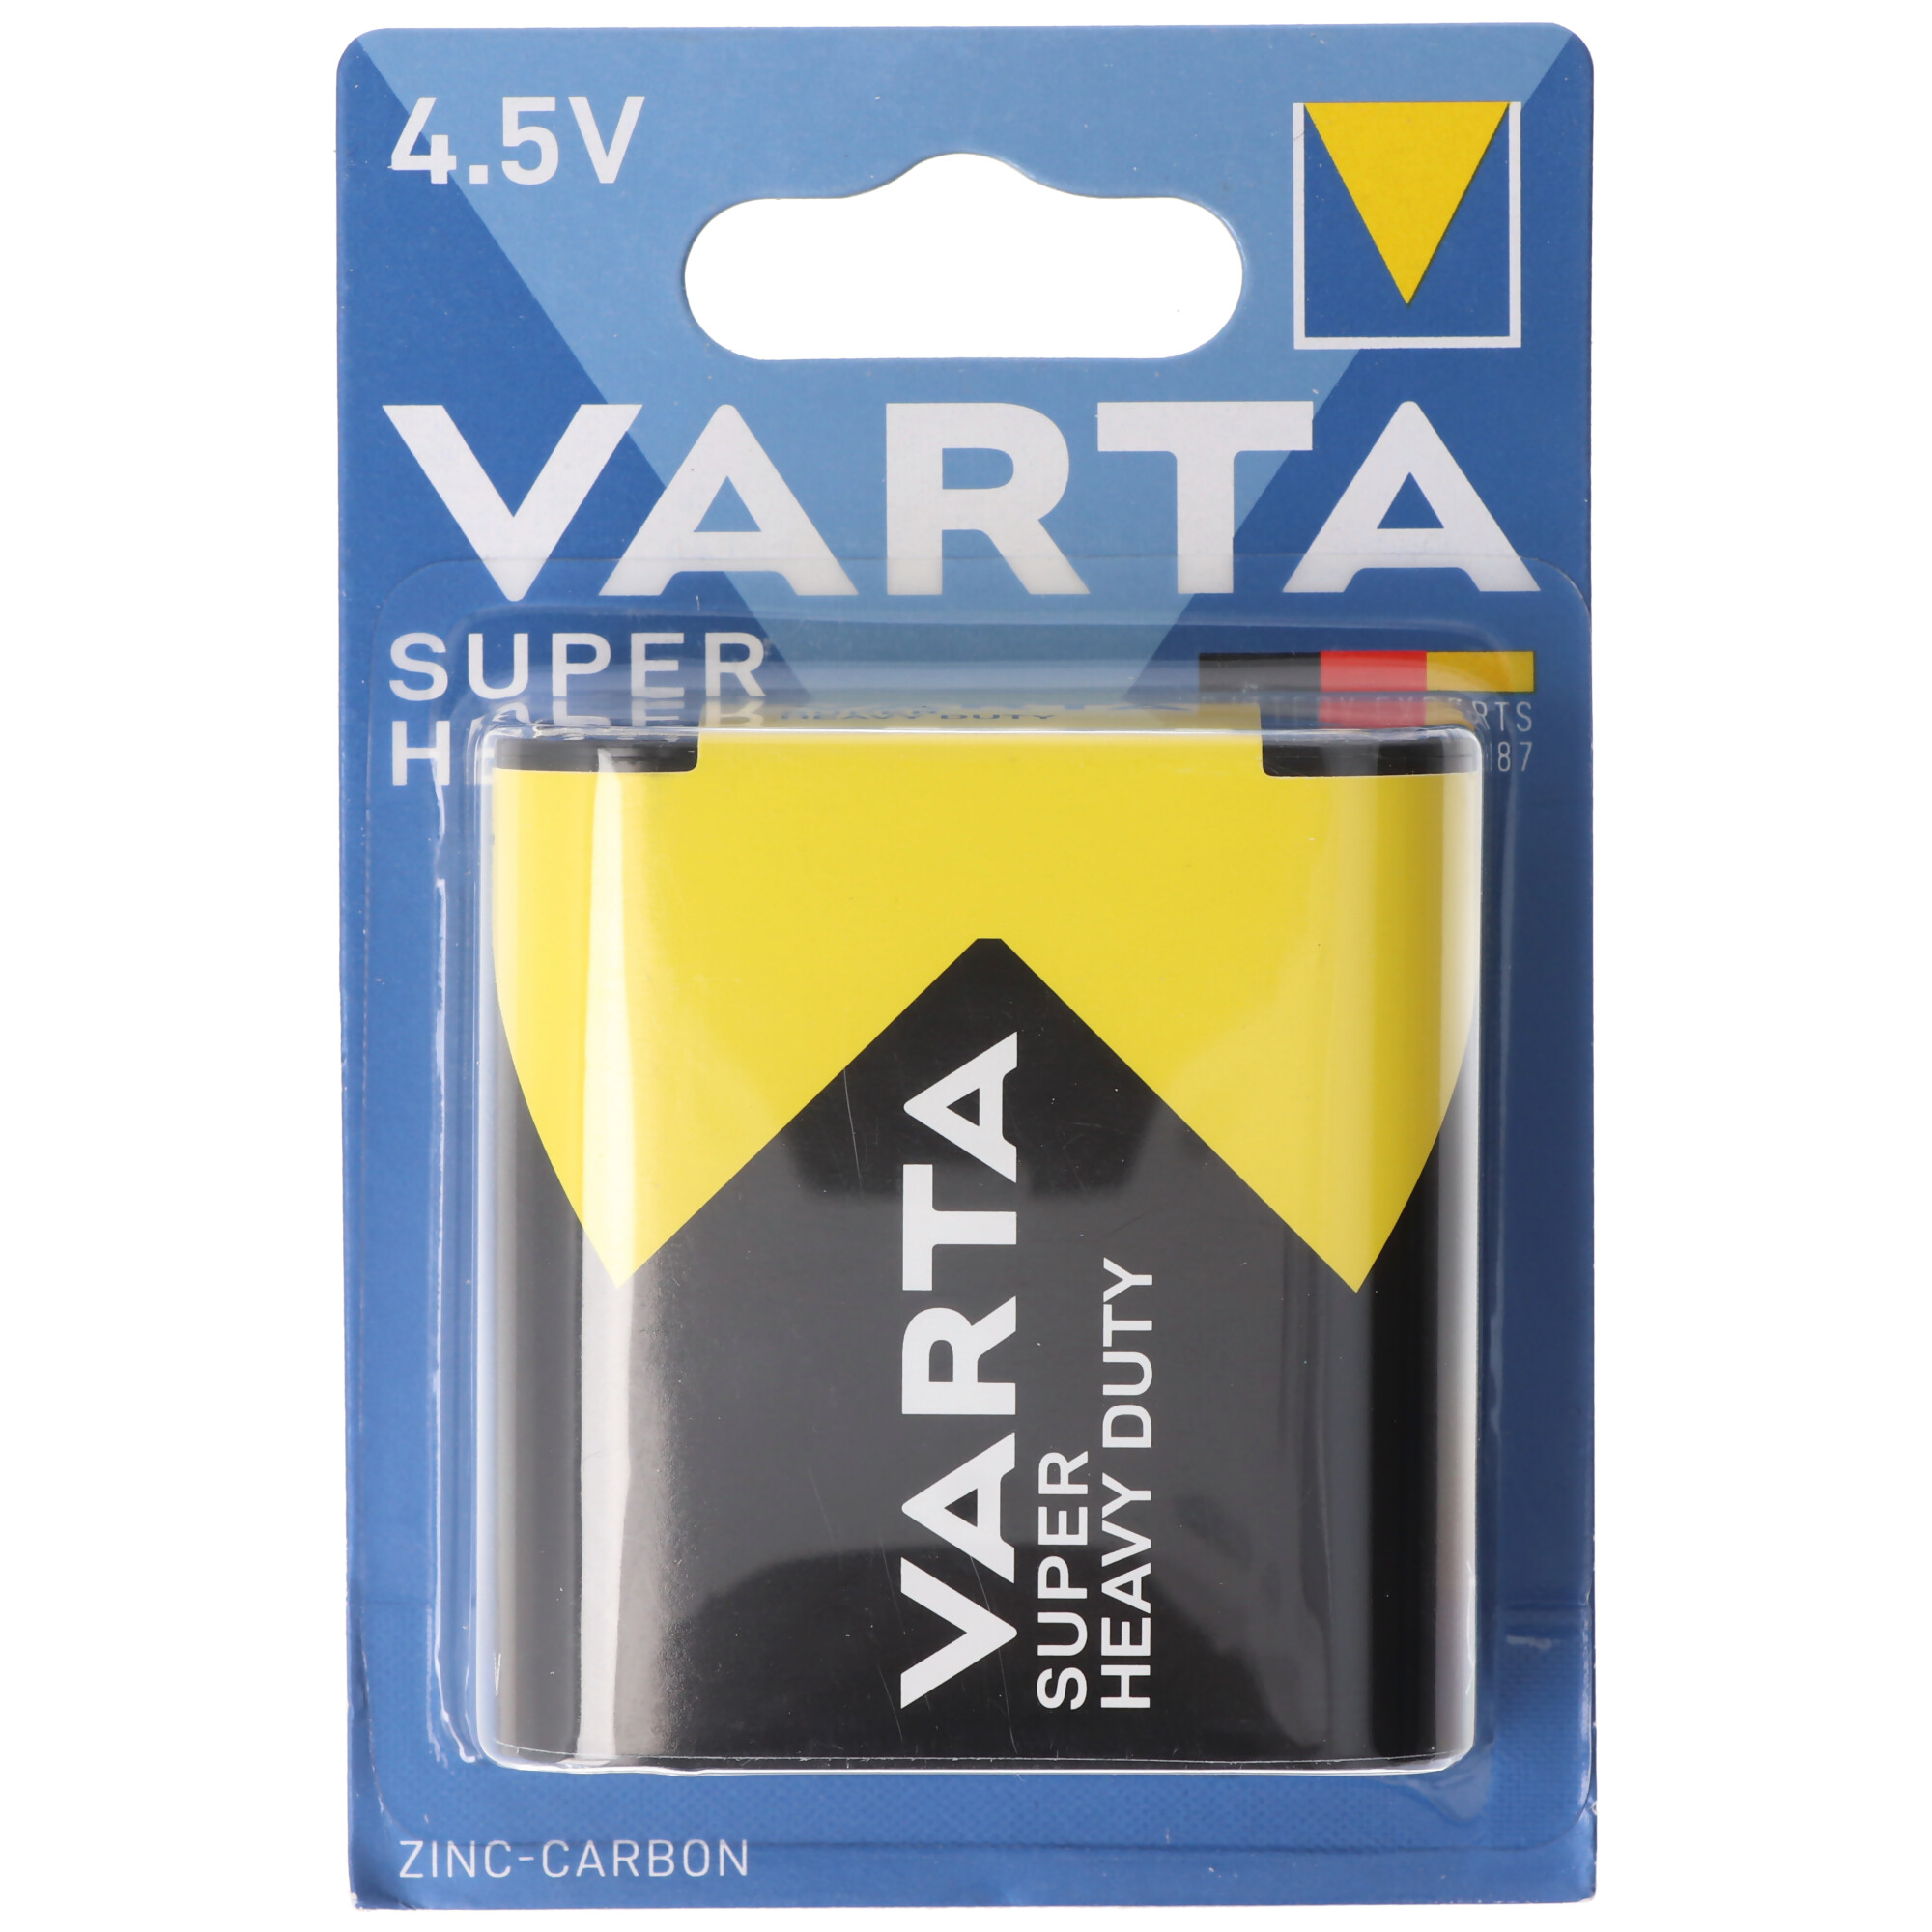 Varta Superlife 4,5 Volt 3012 Normal 3R12, 3R12P Flachbatterie